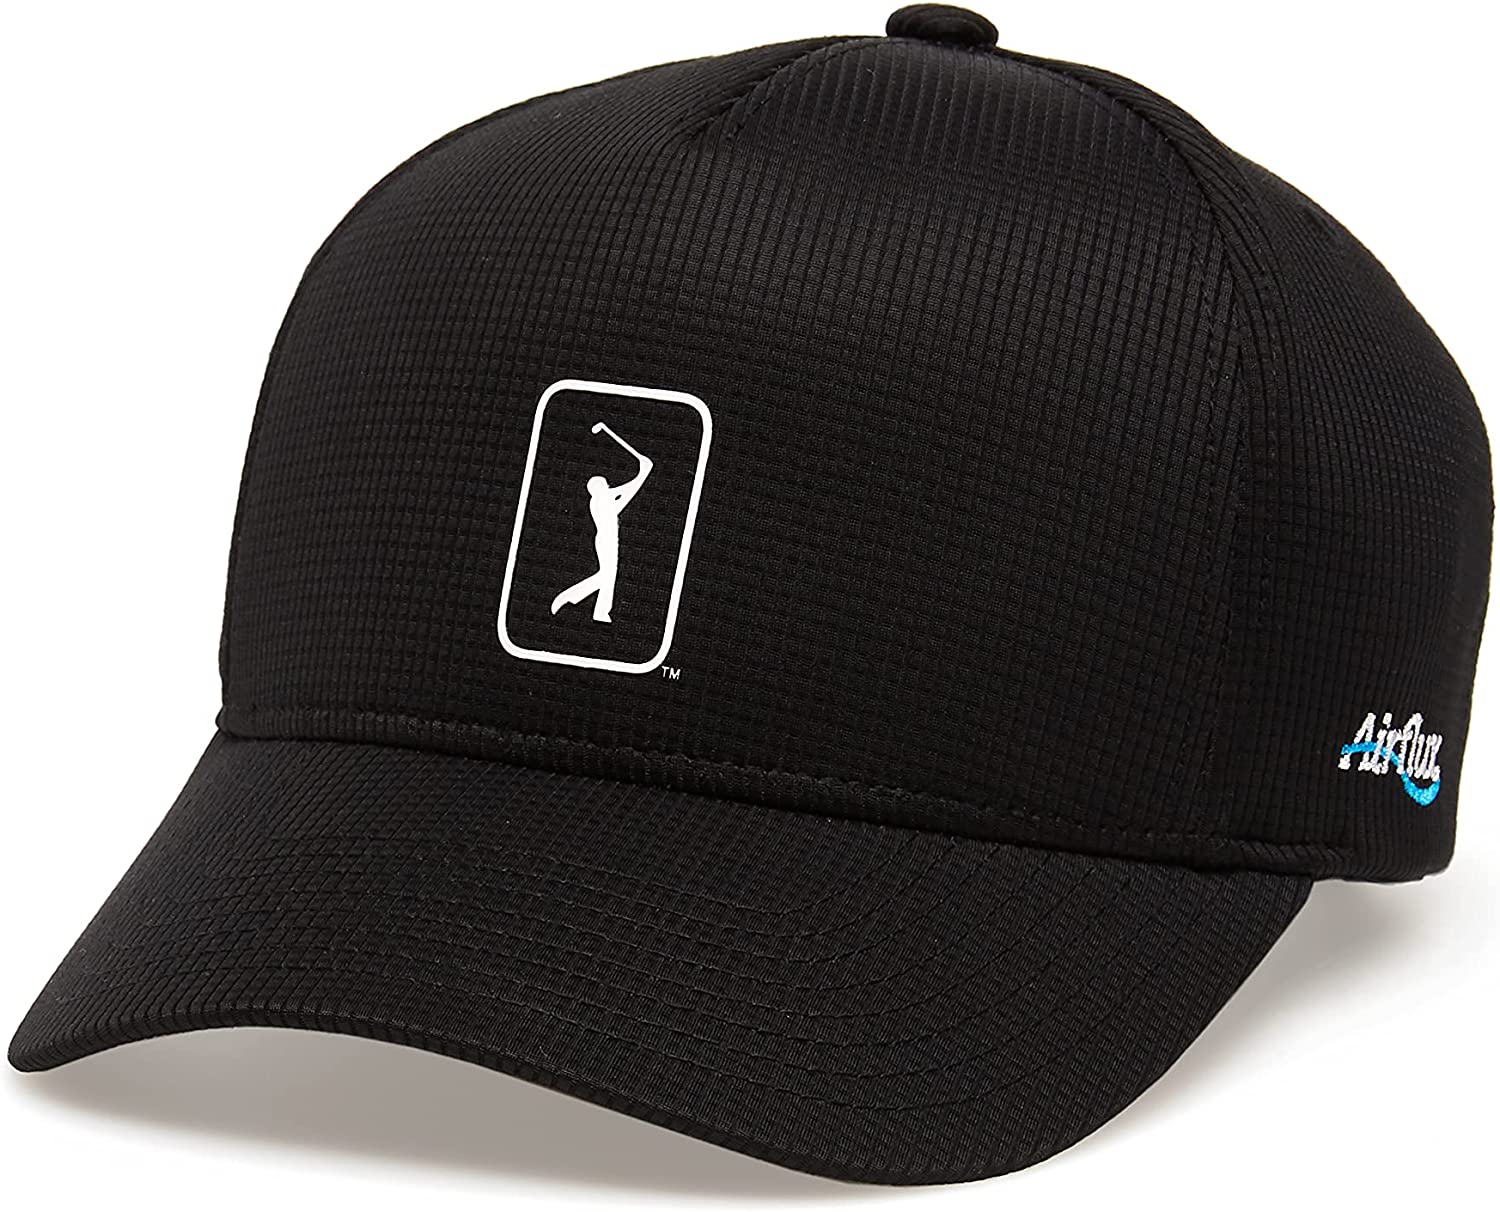 PGA Tour Mens Airflux Mesh Cap (Black) $8 + Free Shipping w/ Prime or Orders $25+